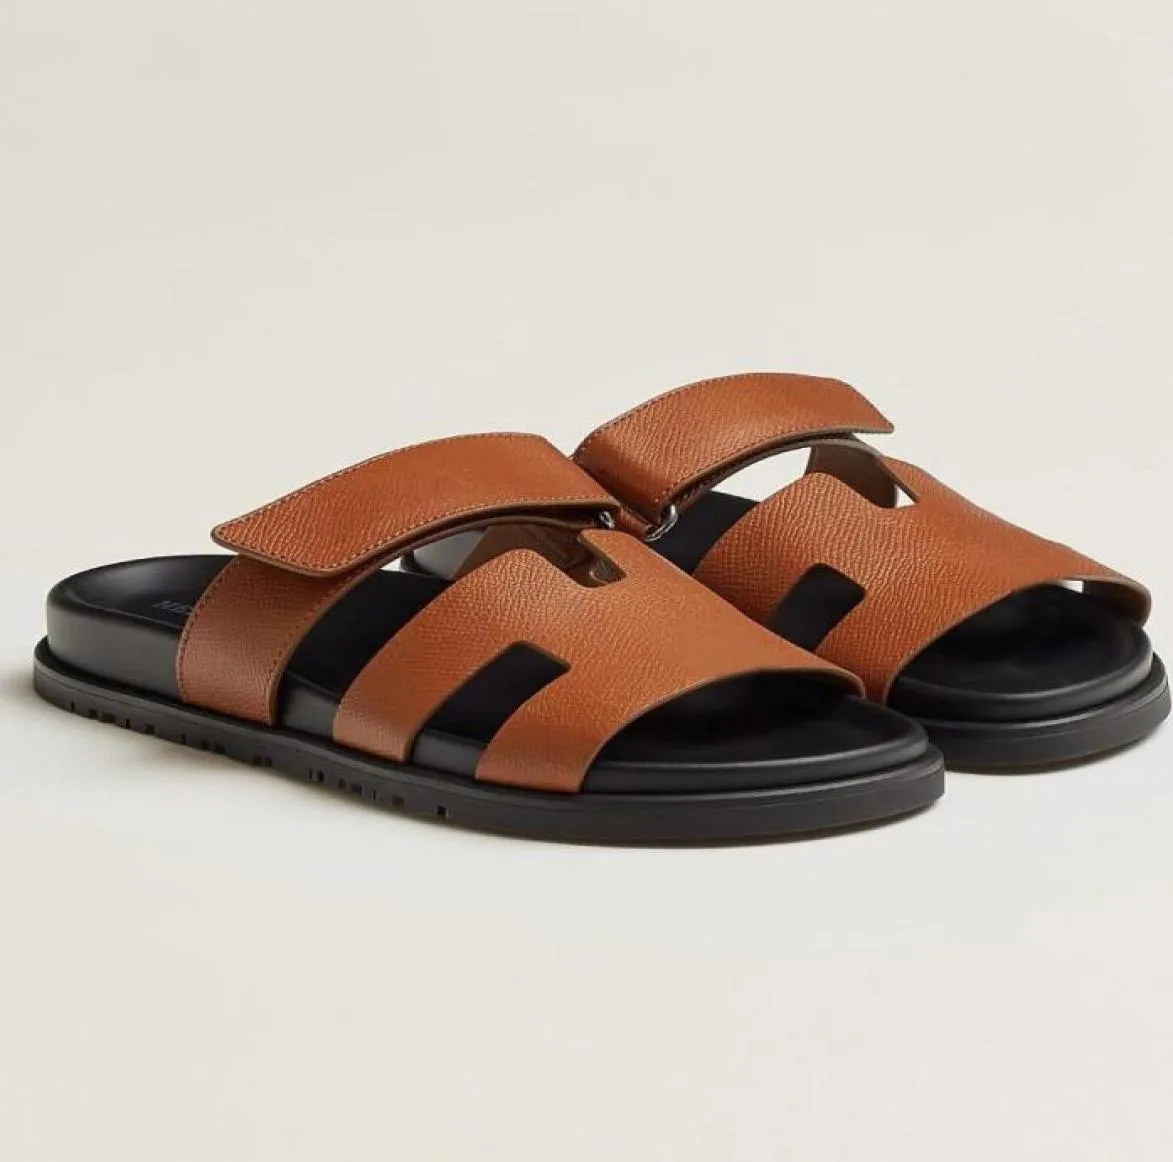 Fashion Summer Luxury Mens Chypre Sandals Chaussures Calfskin Le cuir Slip on Beach Slippers Slide Slide Flats Homme STRAP ALIGNABLE C8137704